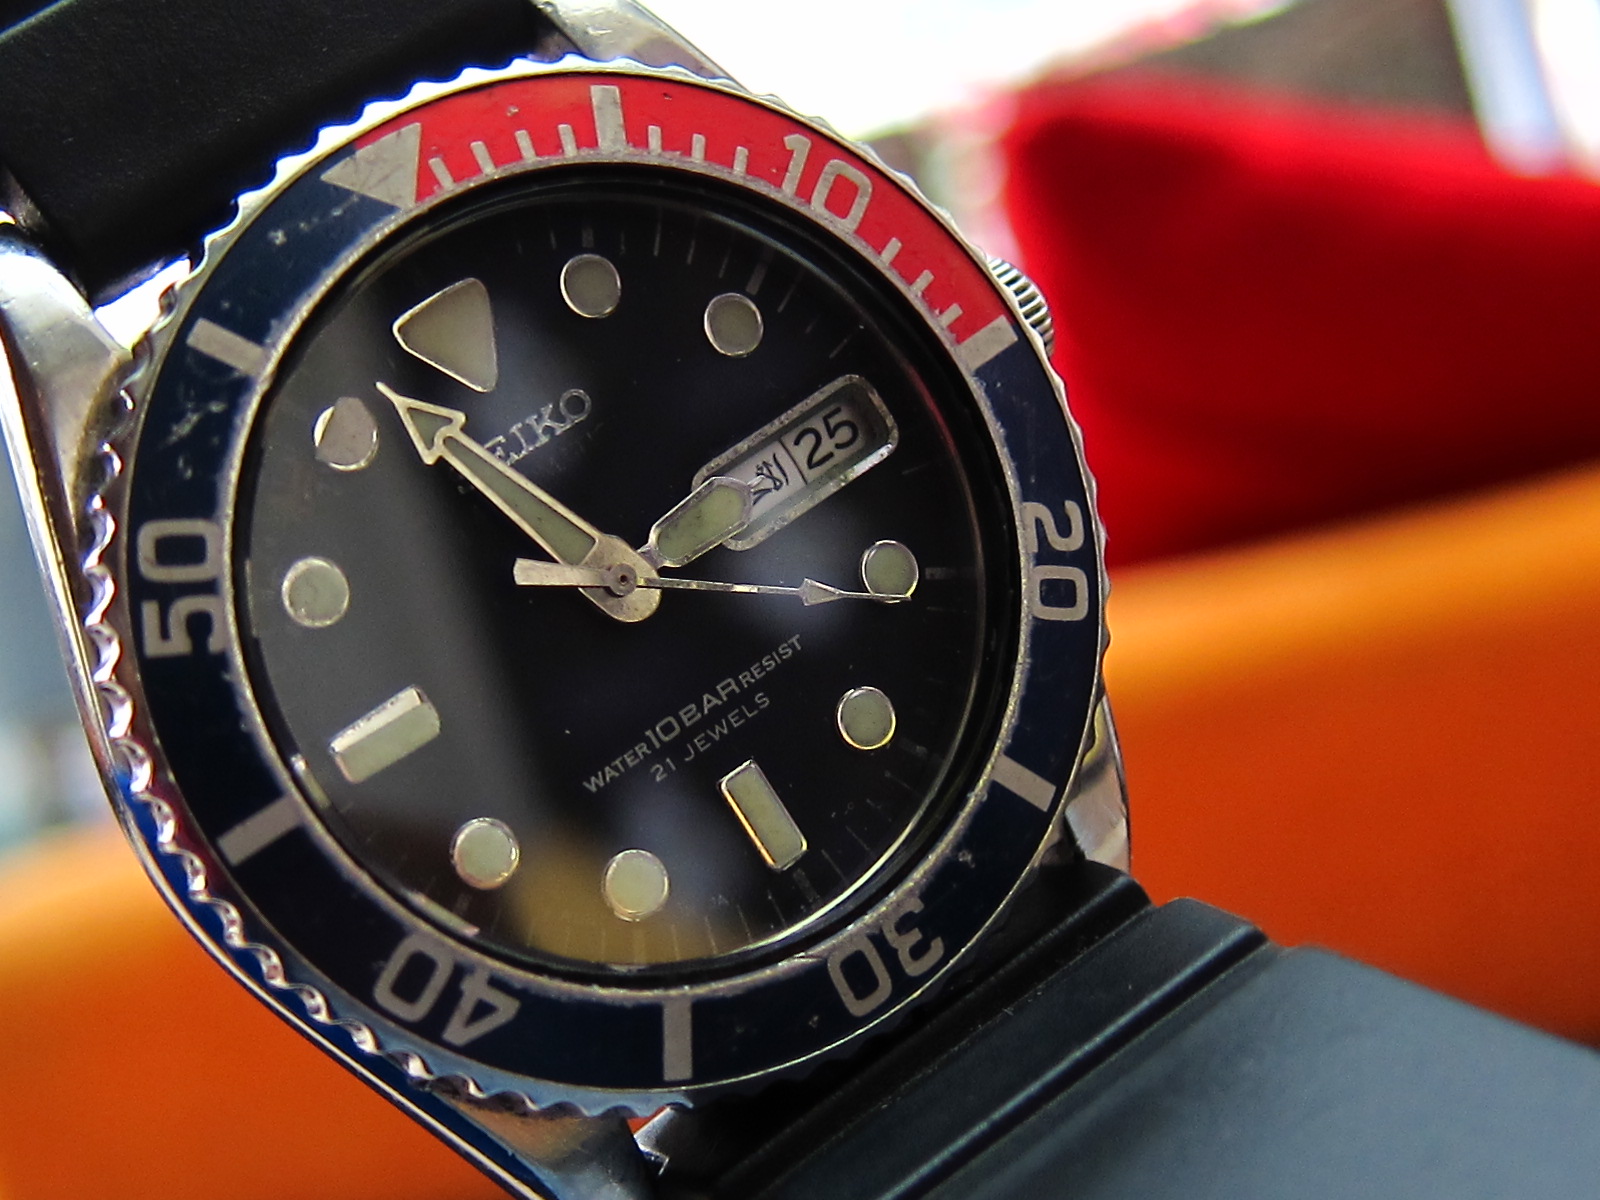 jam & watch: Seiko mid-size diver - 7S26-0050 pepsi bezel (Sold)